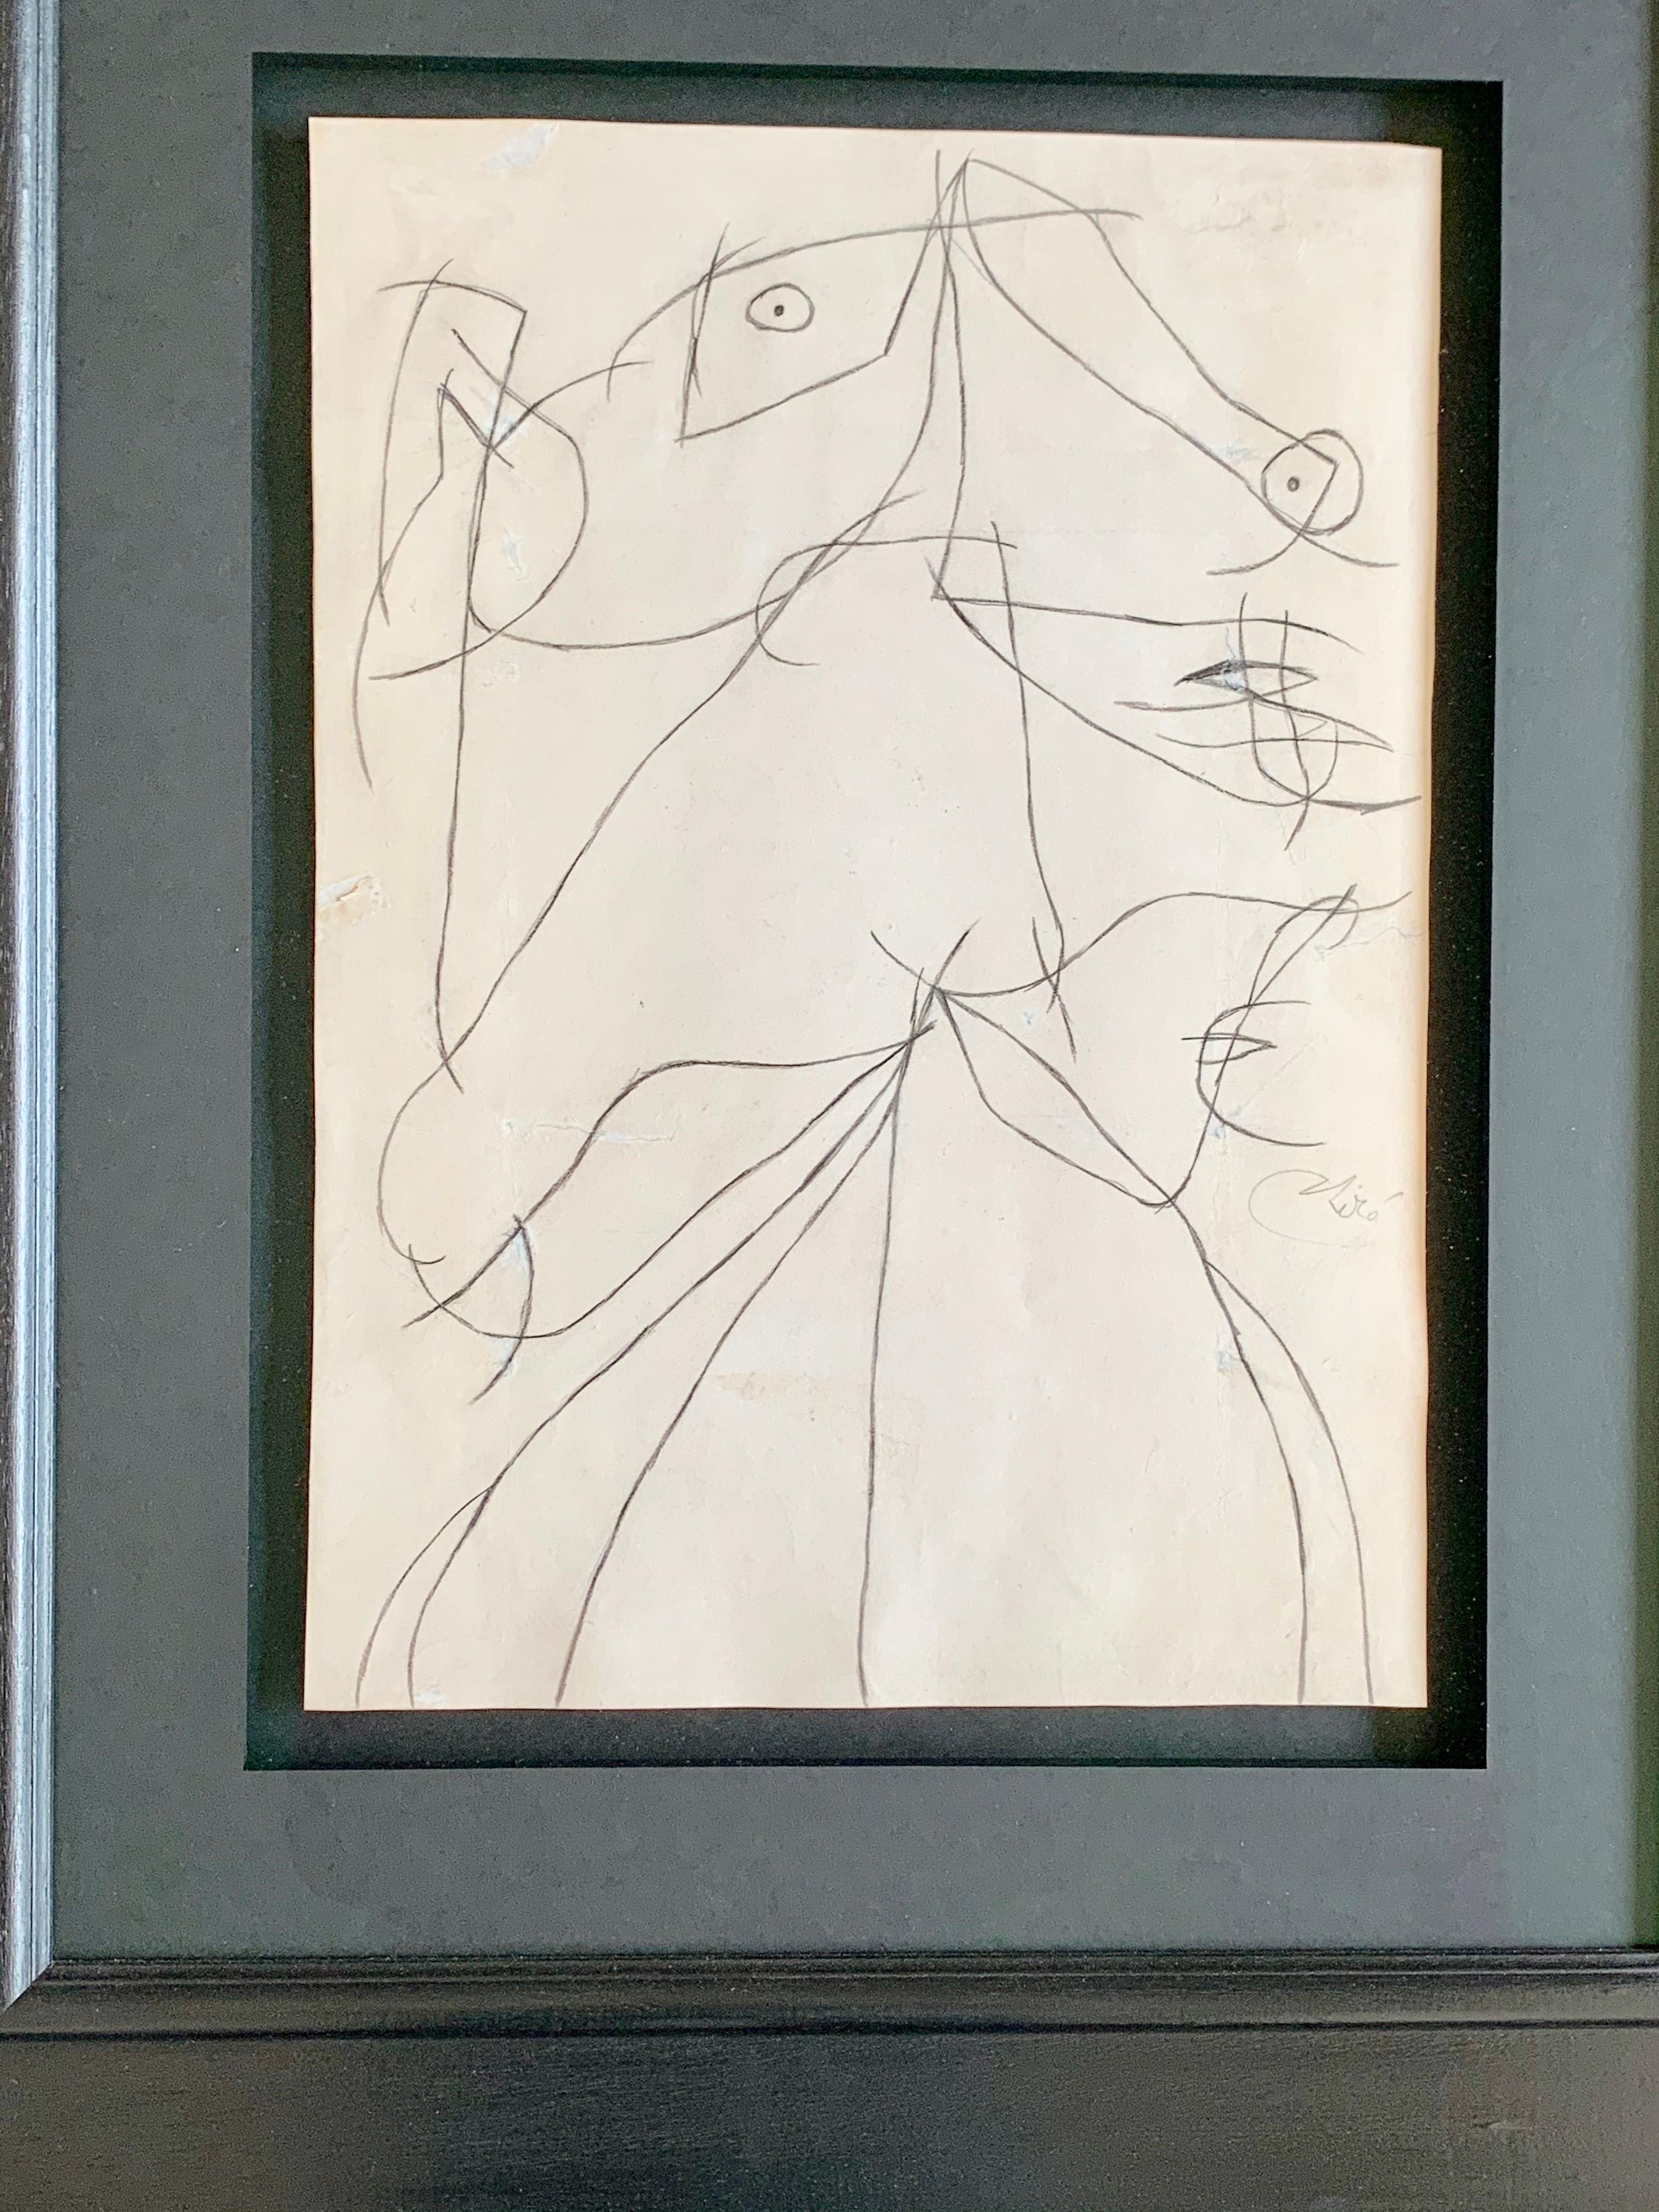 Original Drawing by Joan Miro
Titled: 